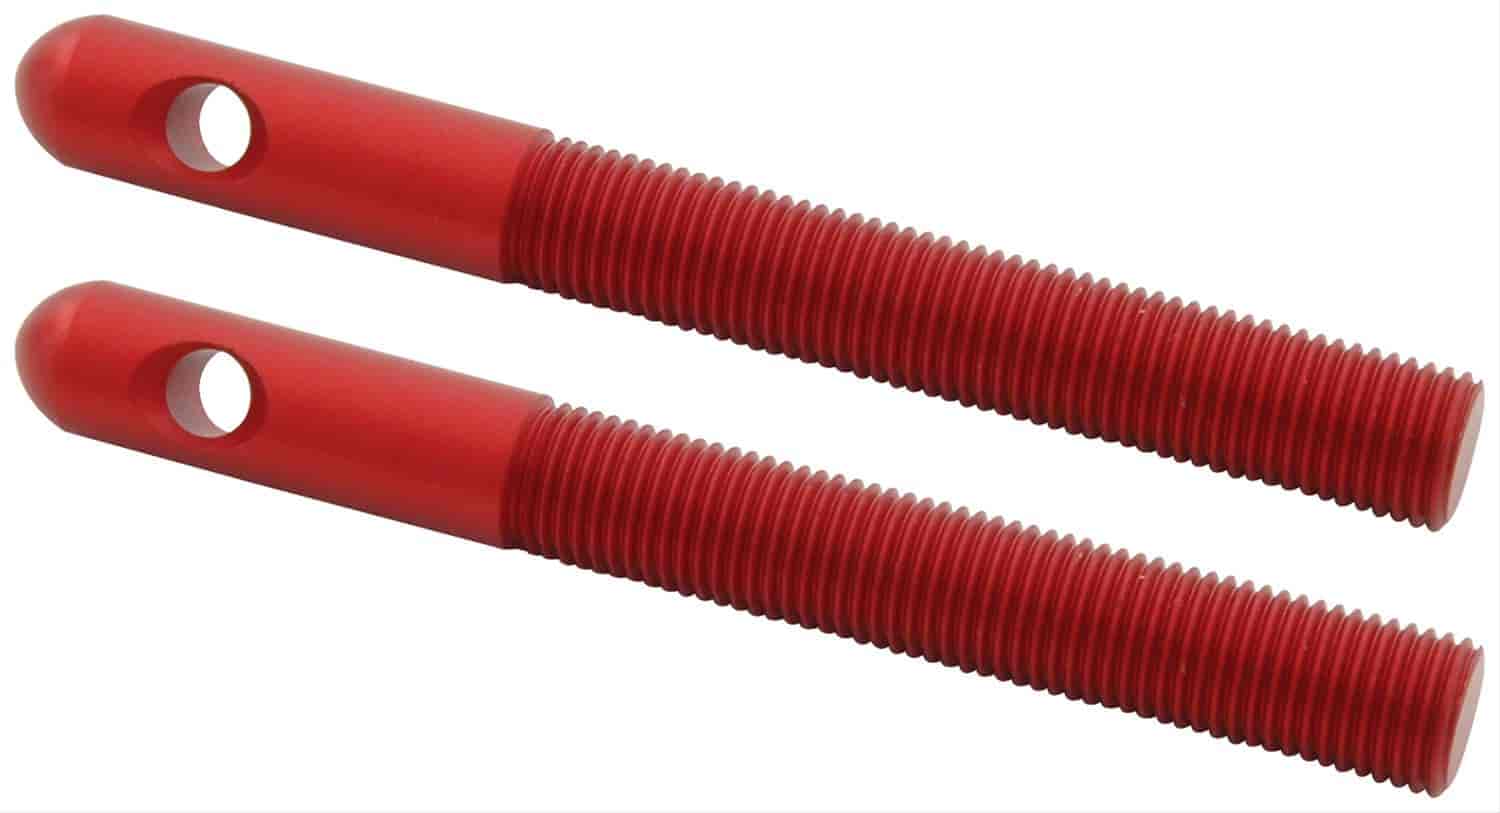 Replacement Aluminum Hood Pins 3-1/2" x 3/8" Diameter Pins Red